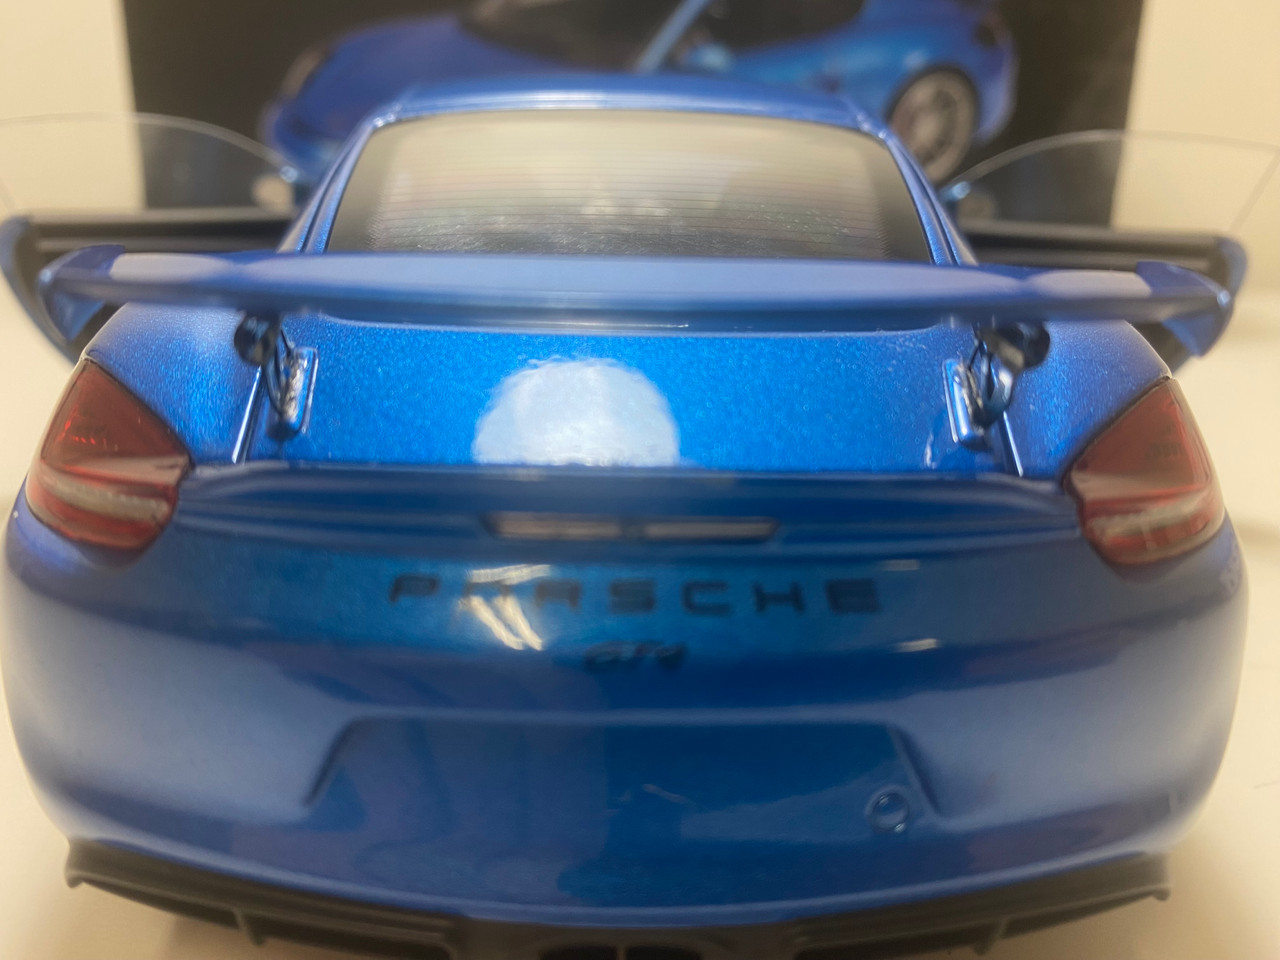 USED AS-IS 1/18 Schuco Porsche Cayman GT4 (Blue) Diecast Car Model